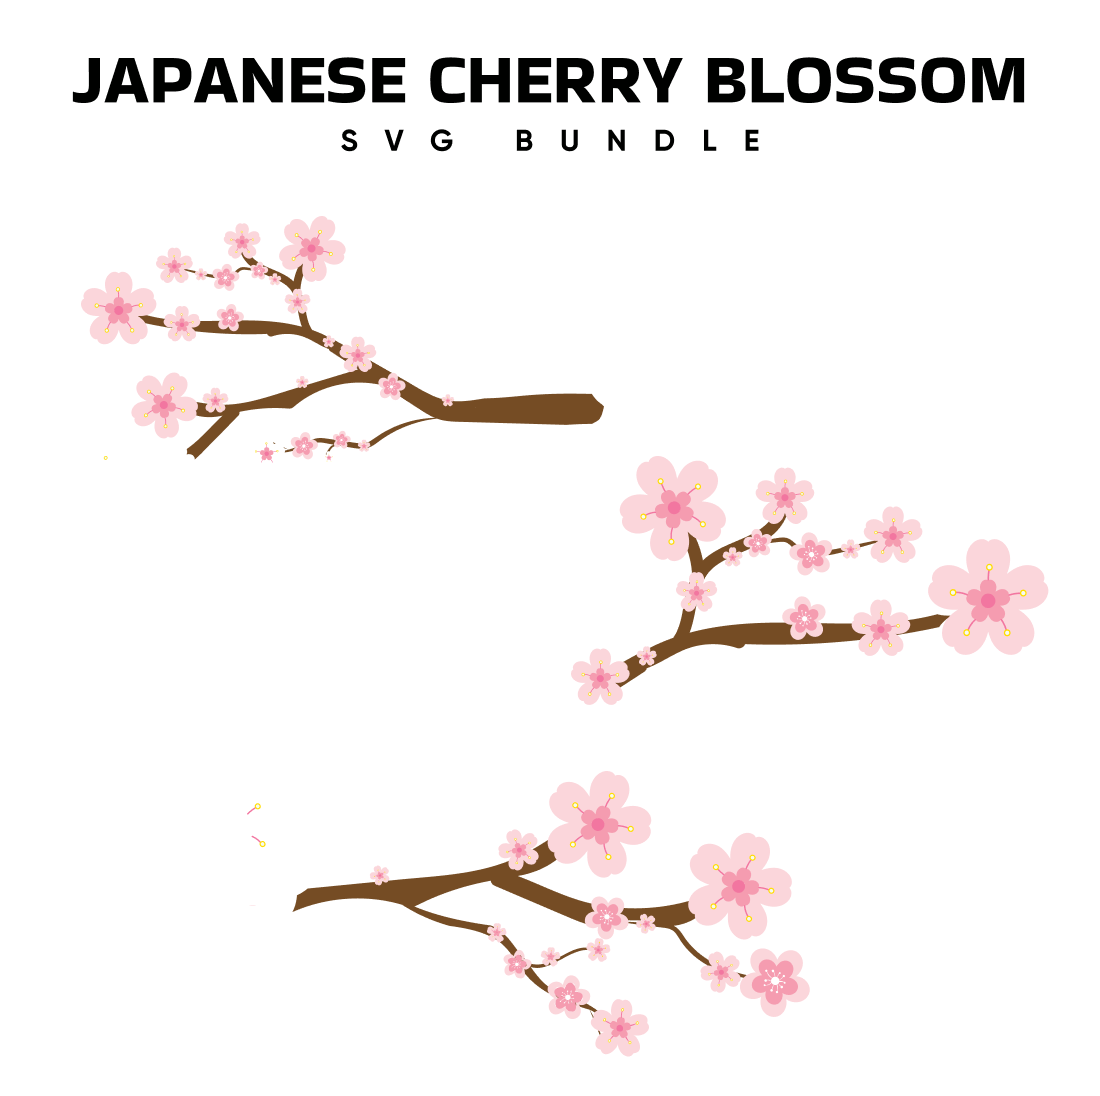 Japanese cherry blossom svg.